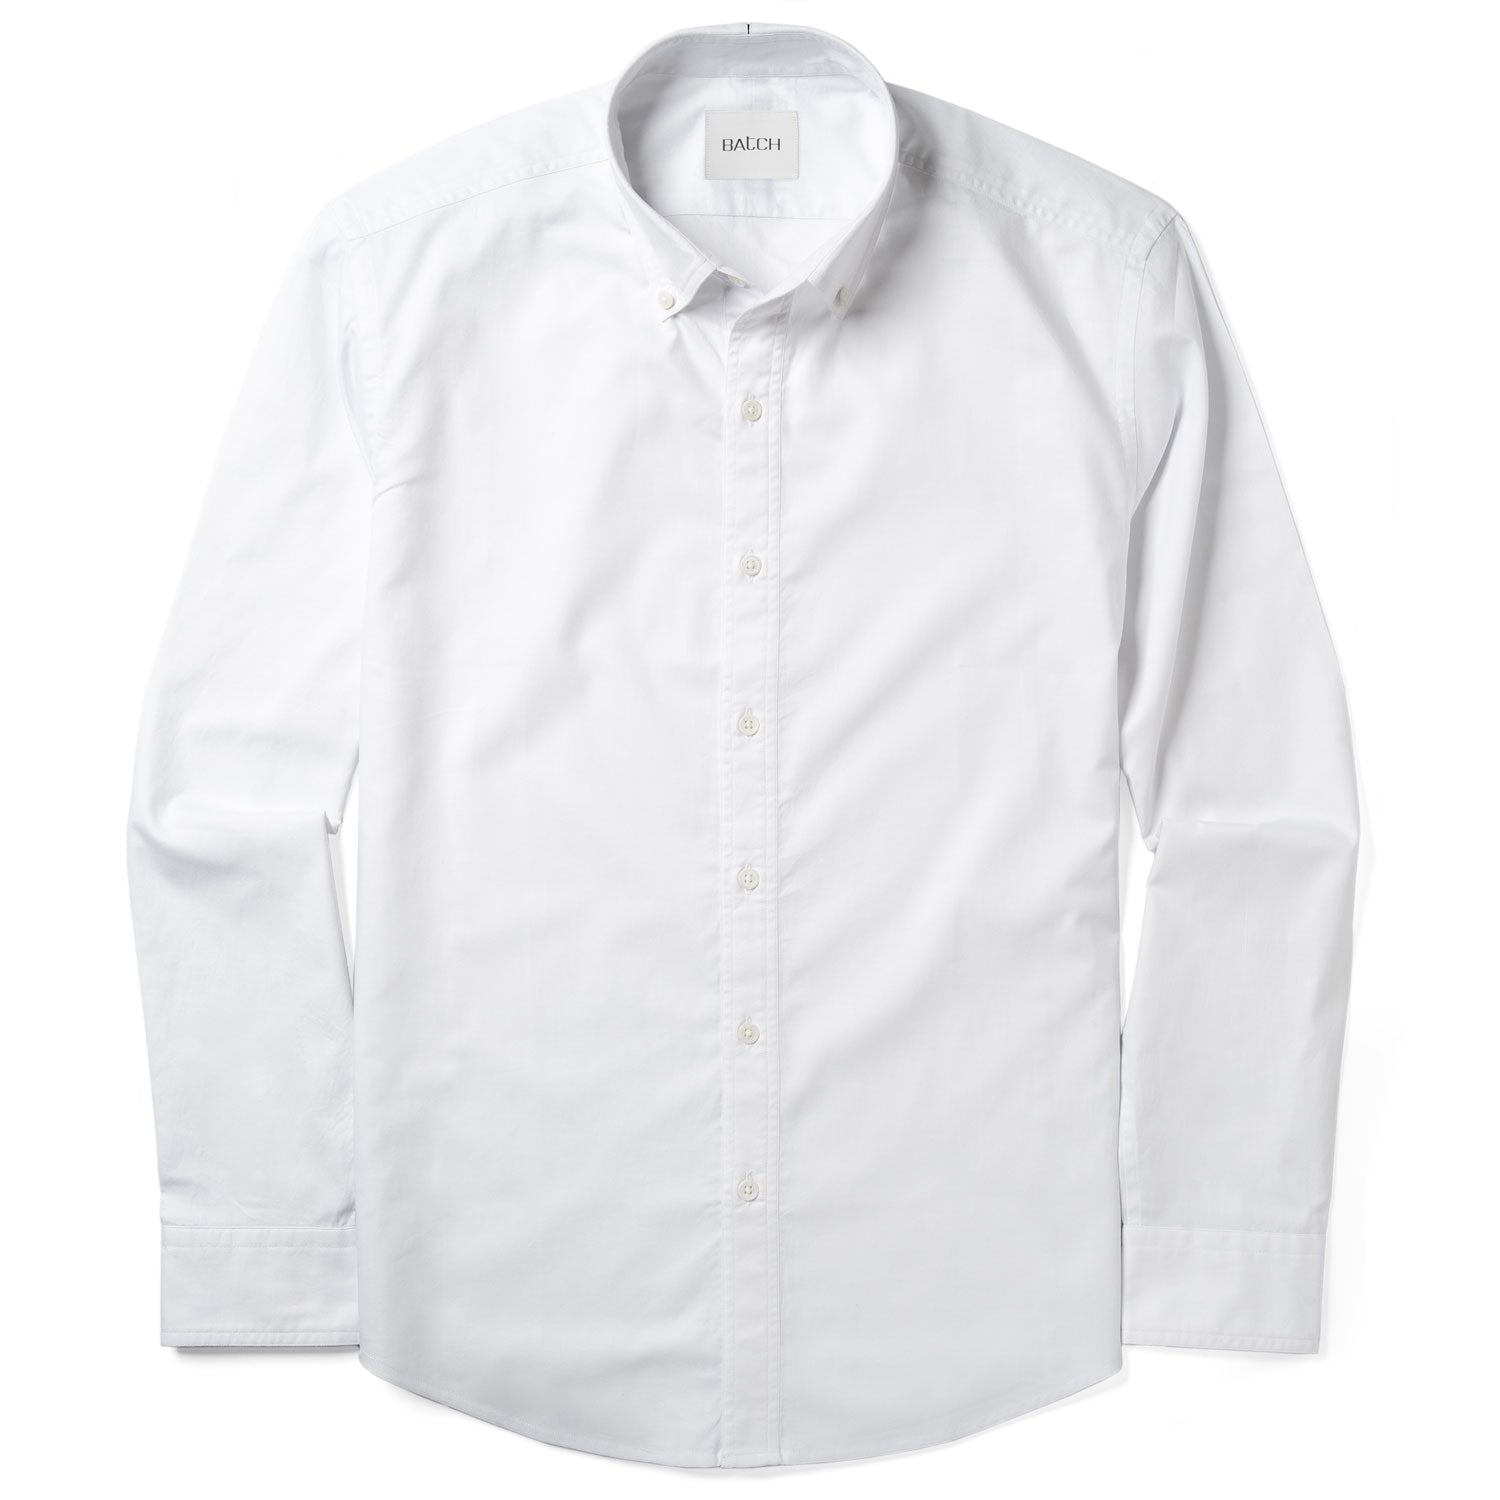 Men's Casual Button Down Shirt in Classic White Cotton Twill Medium - Tall